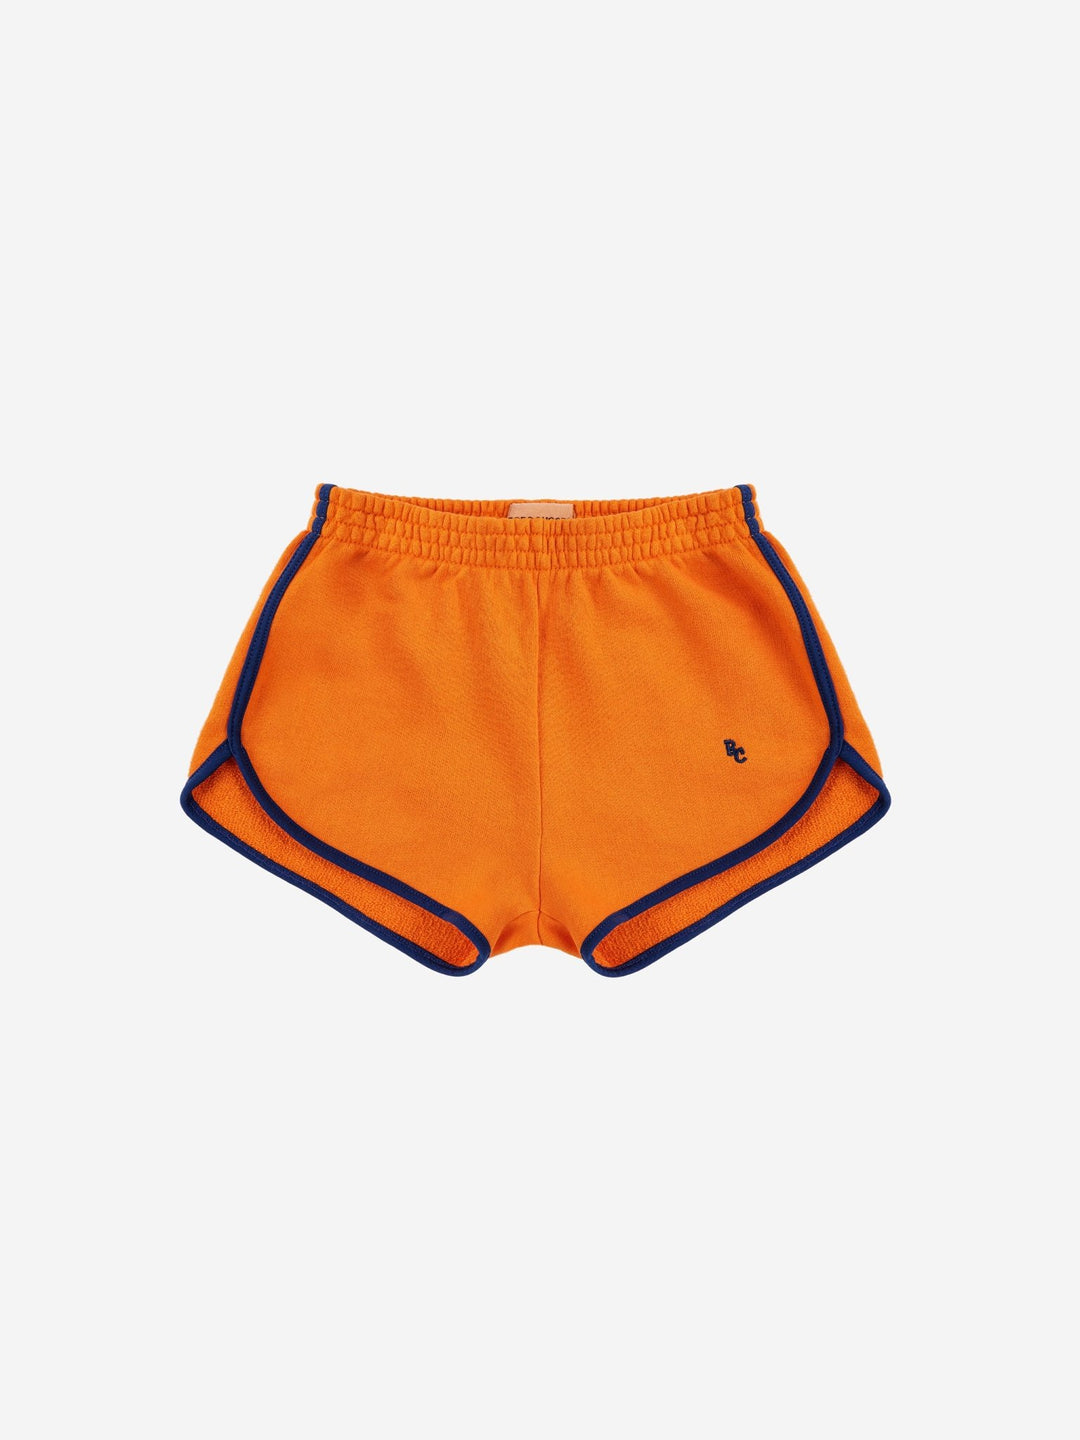 BC Orange Shorts - Orange - Posh New York